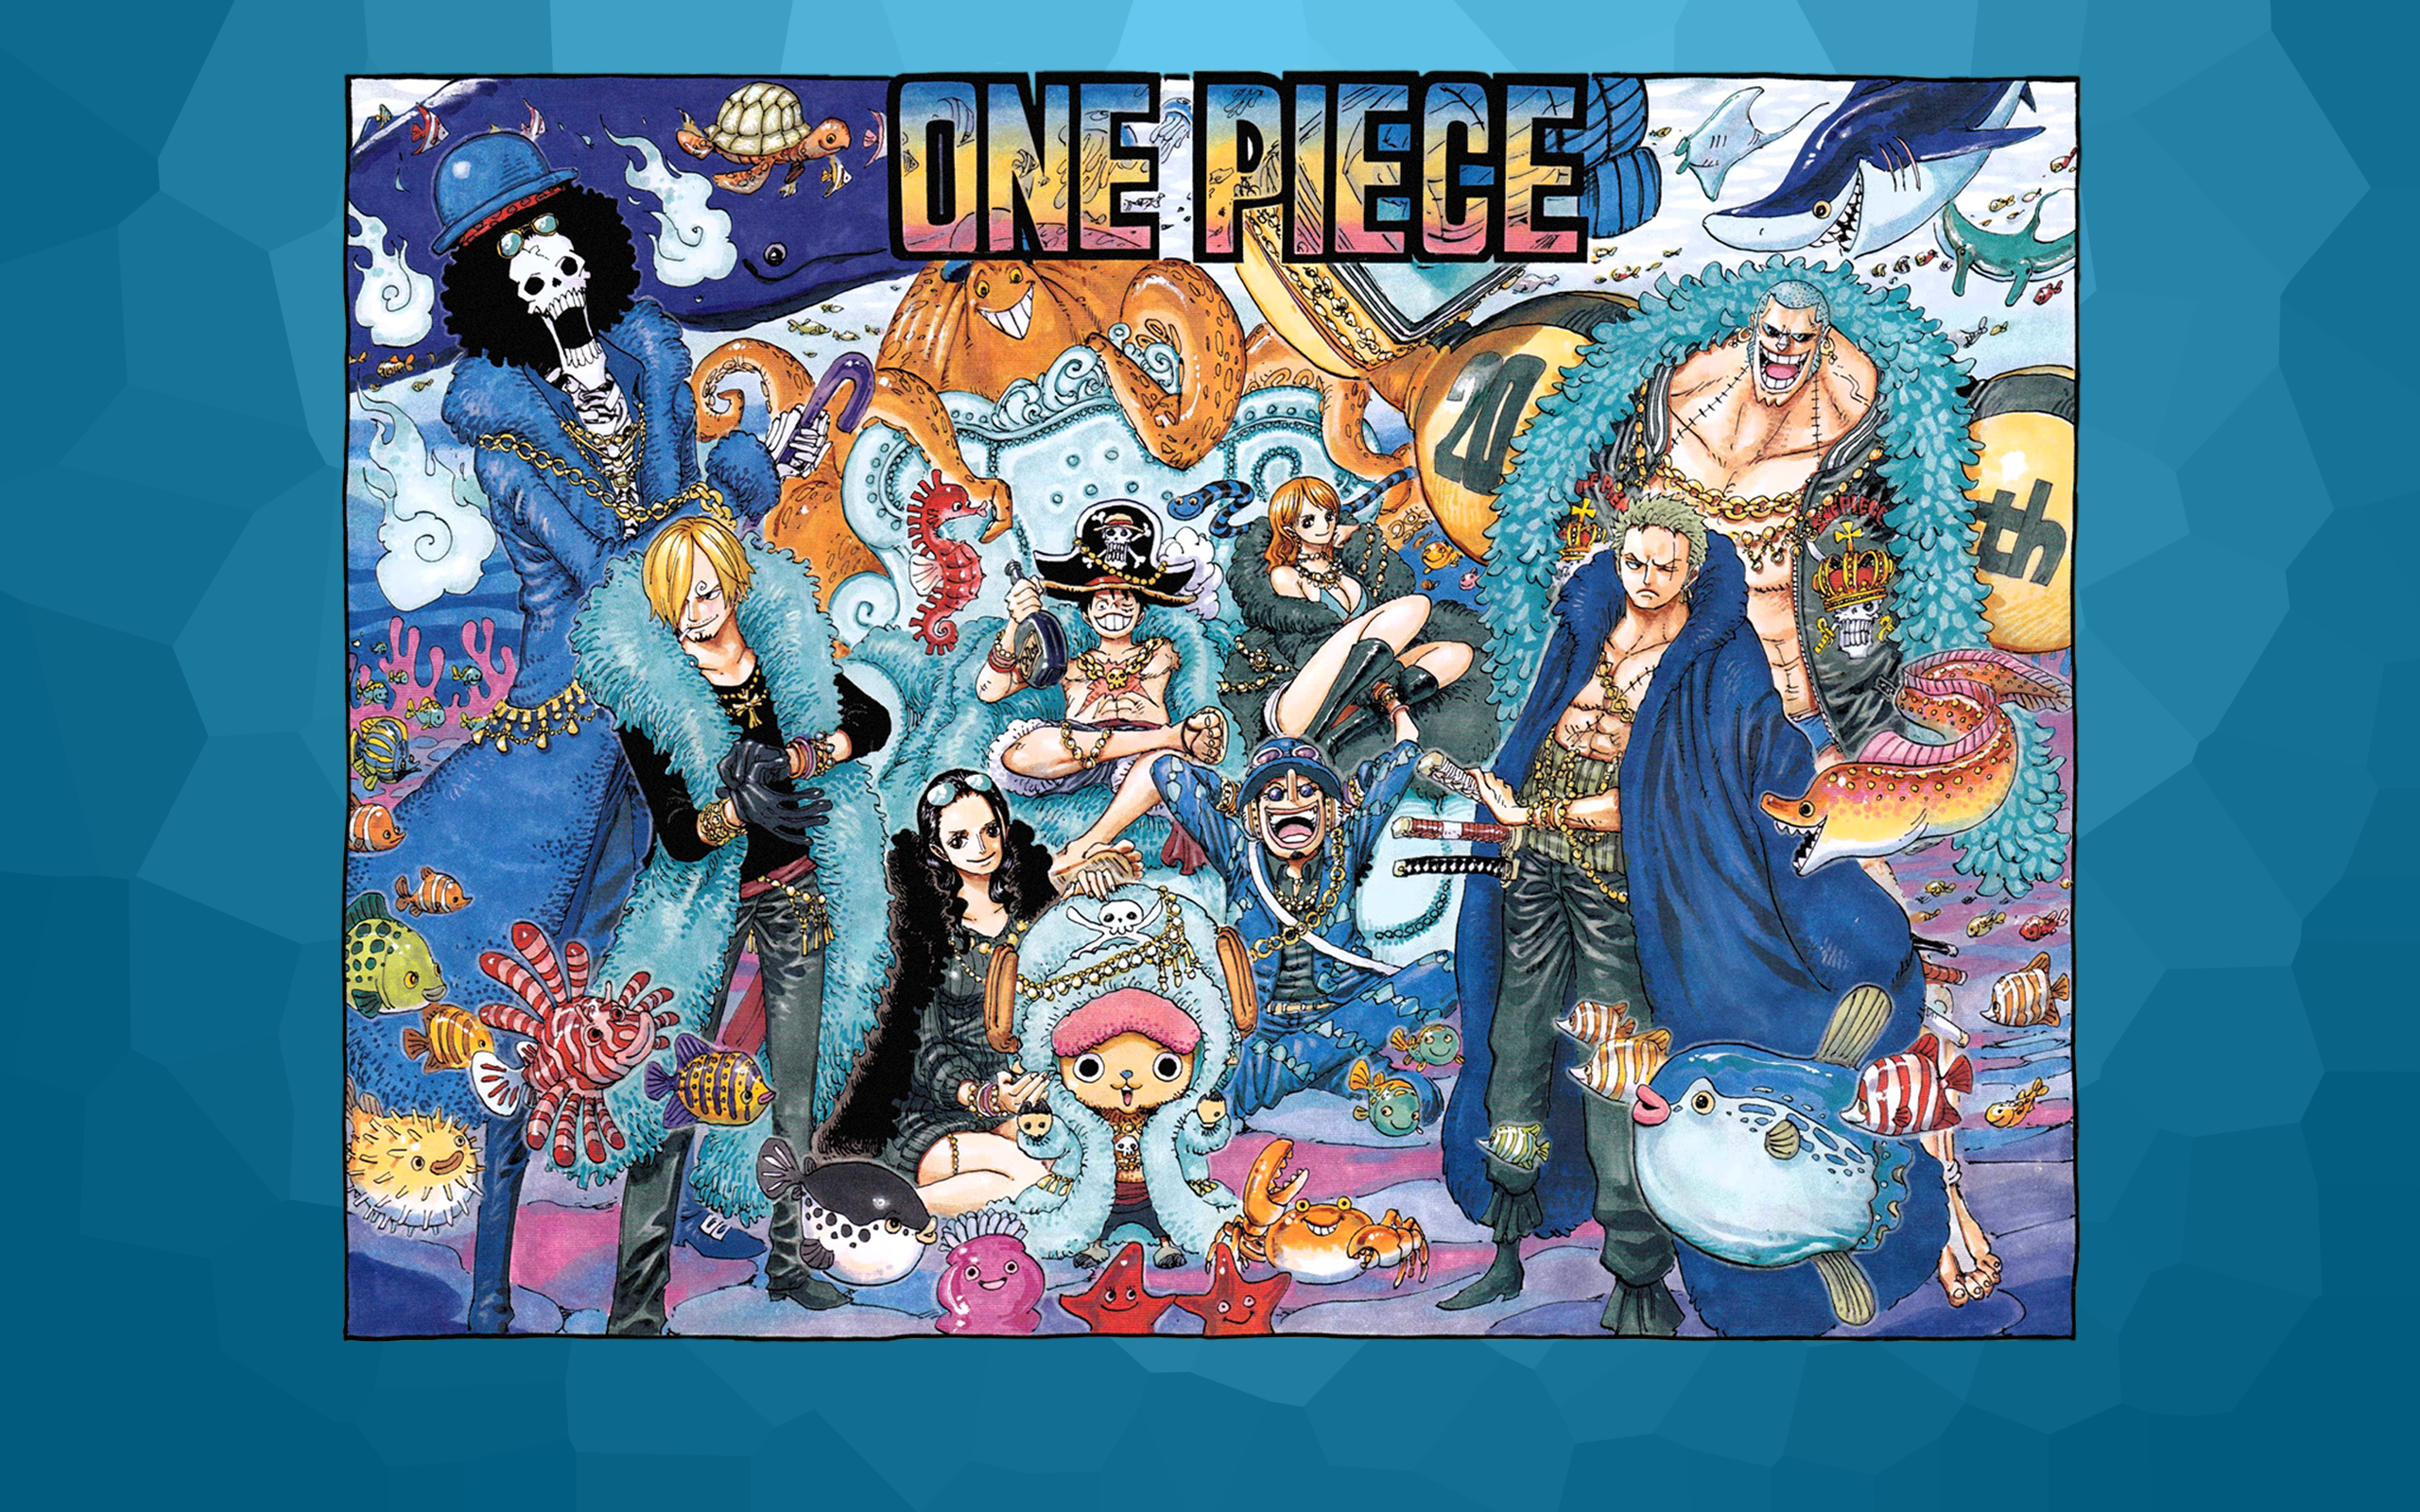 One Piece 20th Anniversary Wallpaper enjoy!